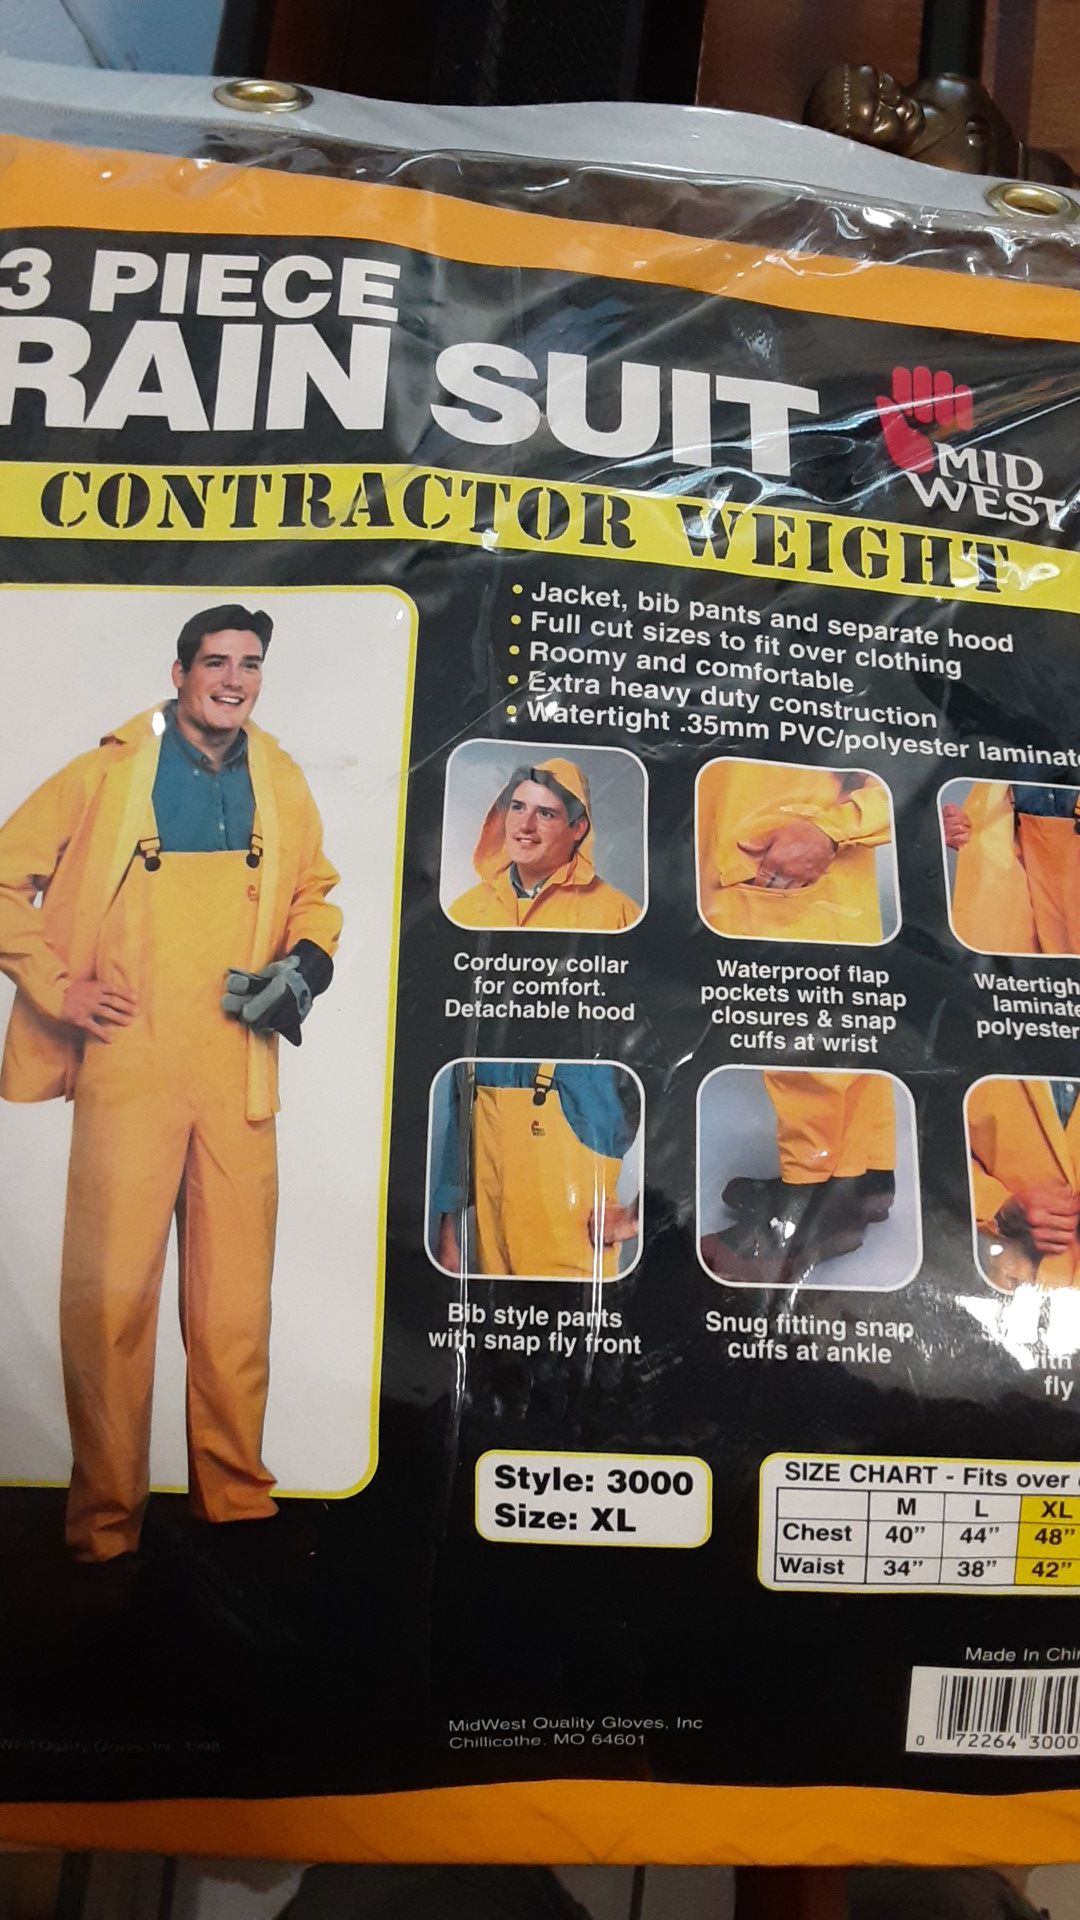 3 piece rain suit contractor weight xl